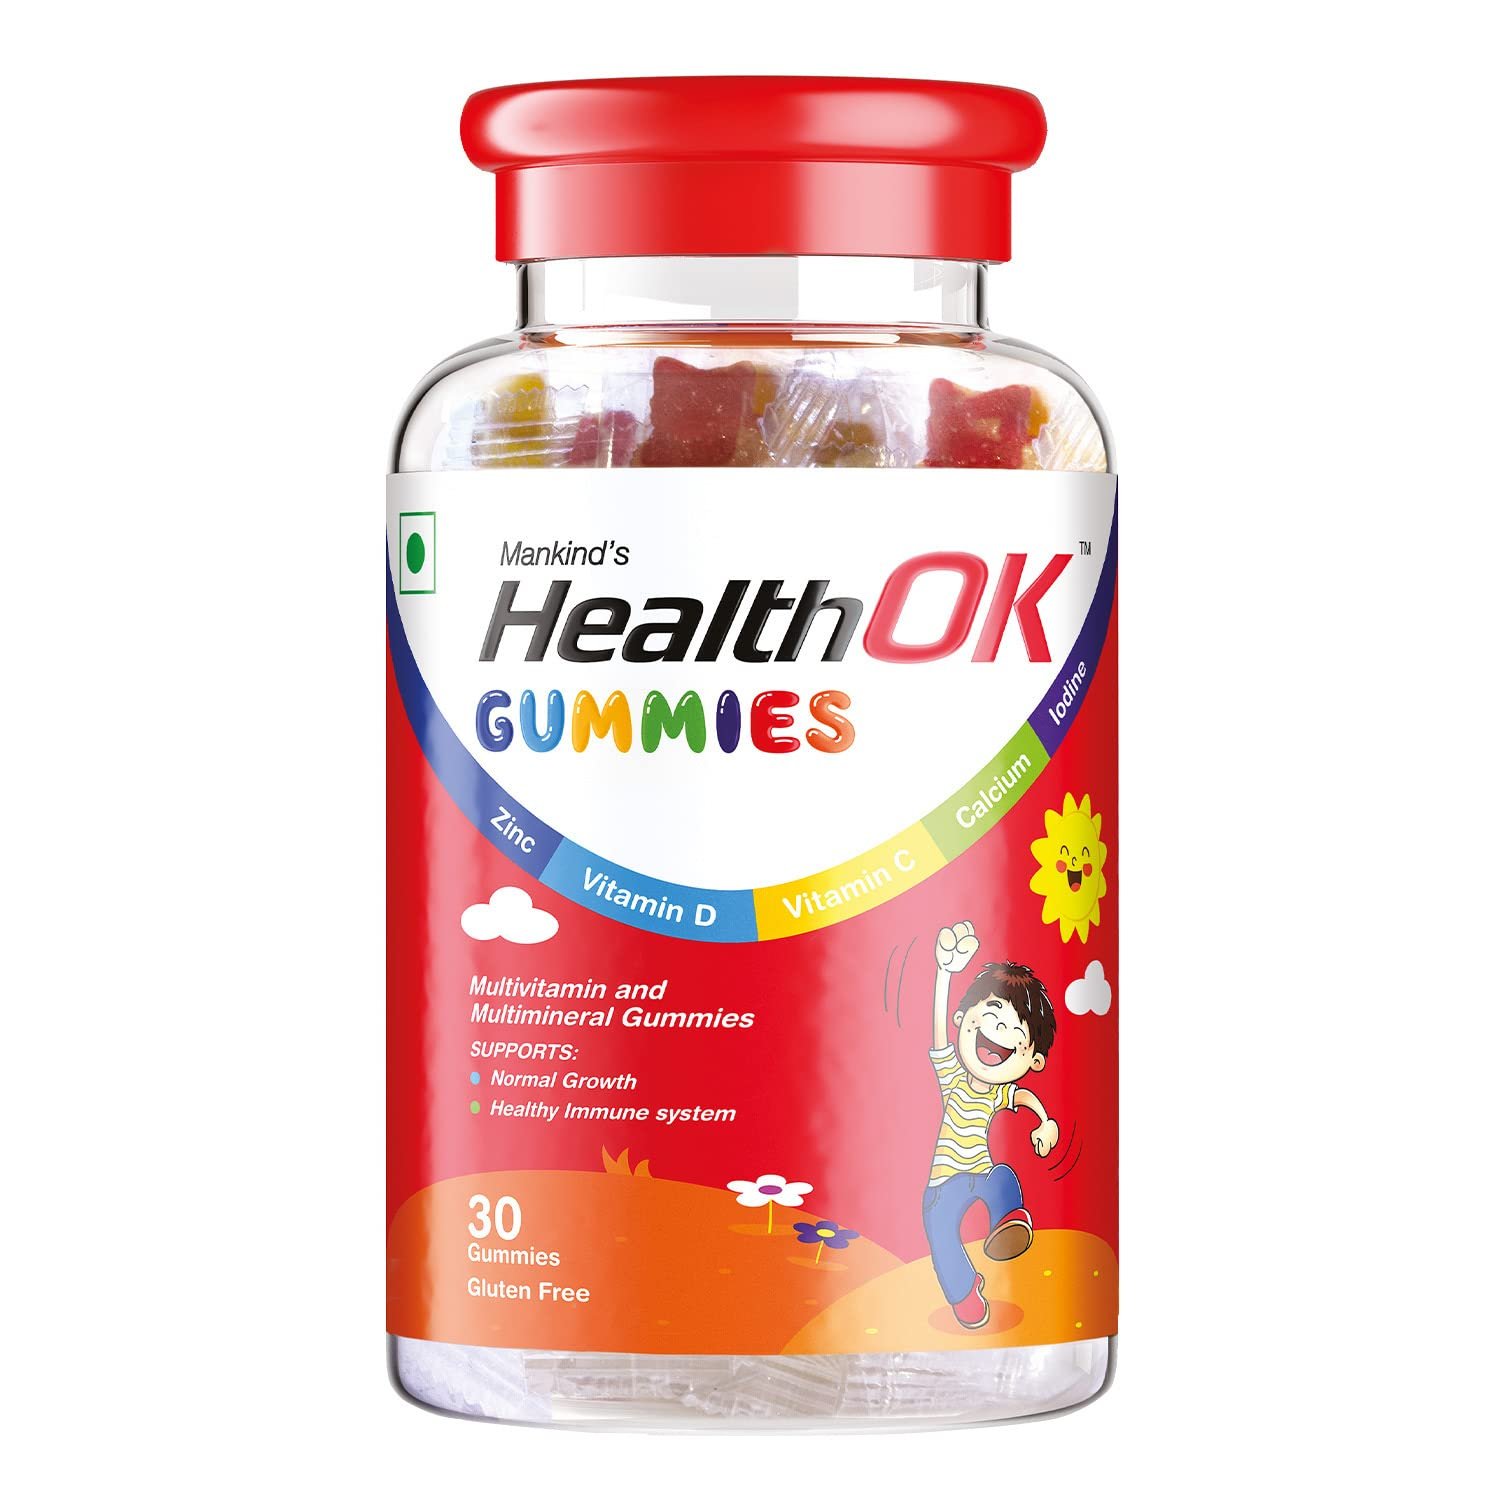 Health OK Multivitamin and Multimineral Gummies | For Normal Growth, Bones & Immunity (30 Gummies)